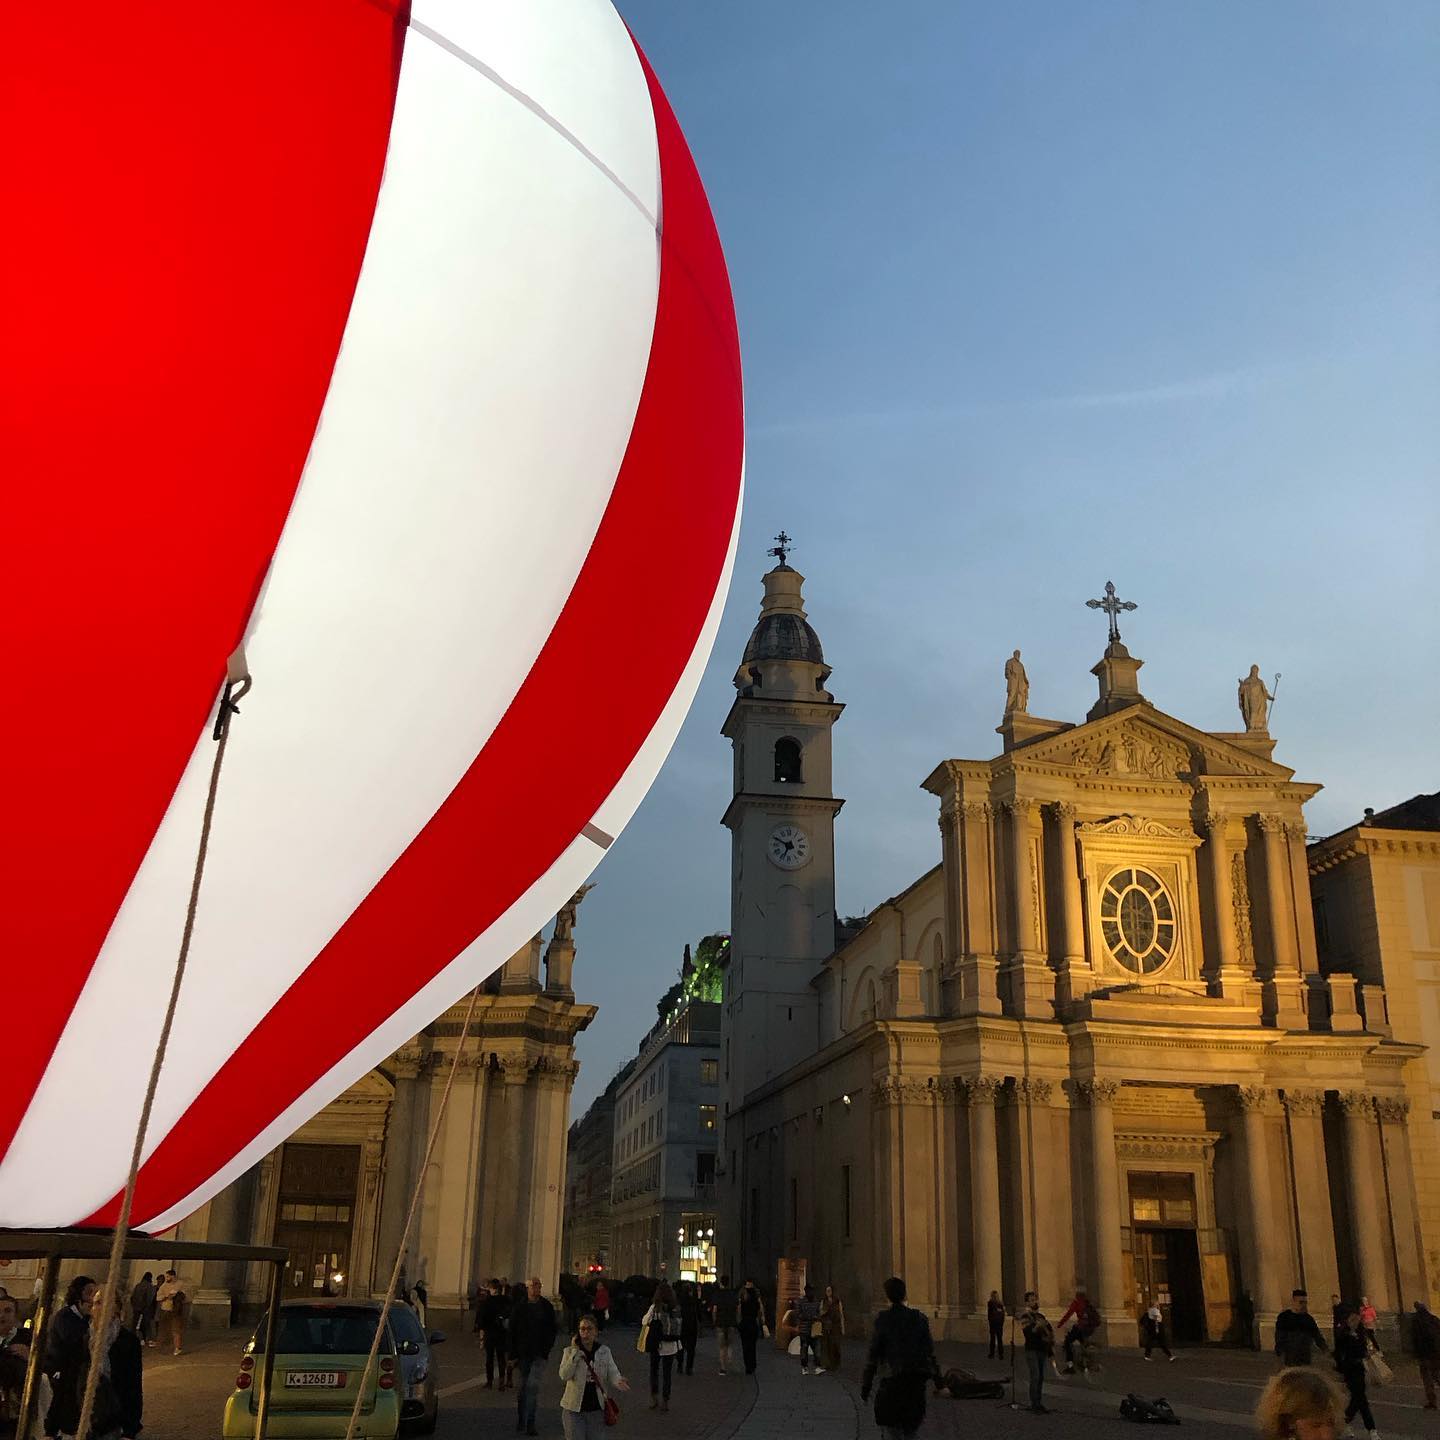 Arrivano le mongolfiere piene di CioccolaTó a Torino! 🍫🍩😋
#ig_torino #torinoèlamiacittà #urbanshot #cioccolateria #citylights #citylife #torinocentro #mongolfiera #baloons🎈